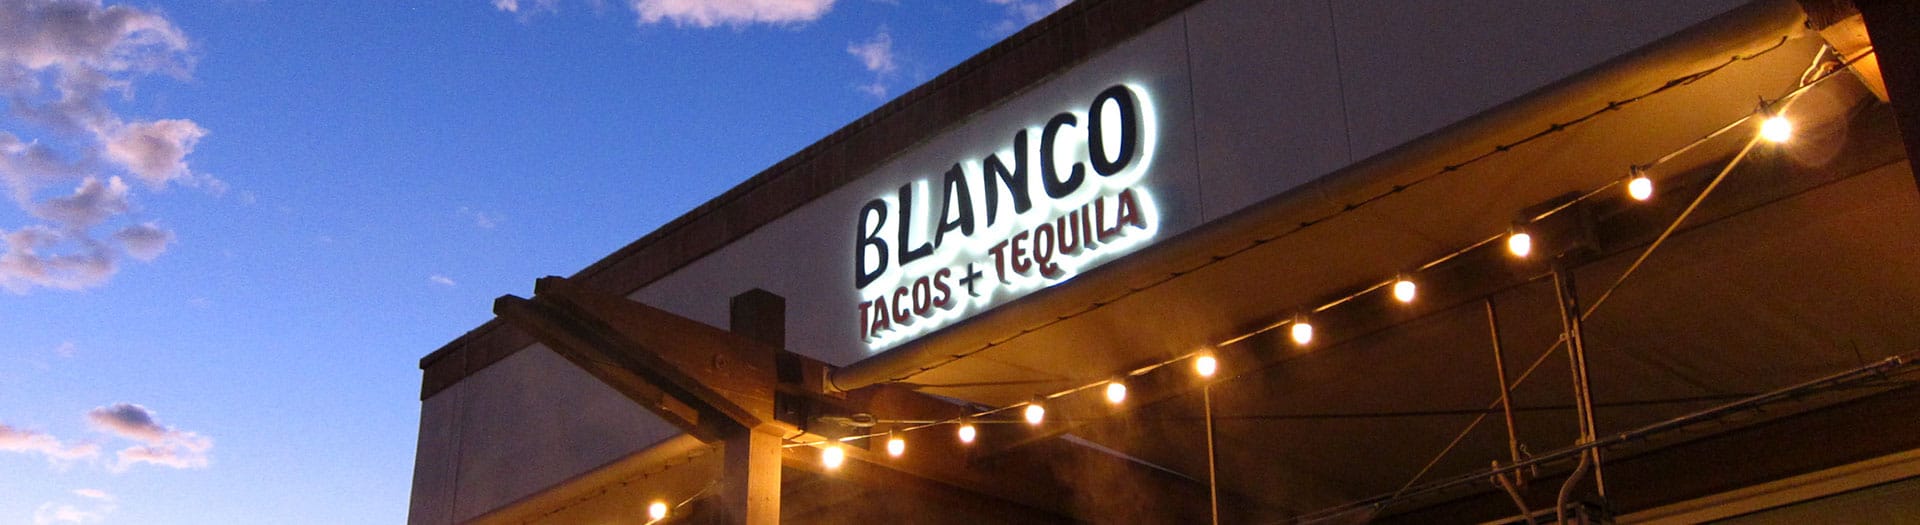 Blanco Cocina + Cantina – Tucson - Tucson, AZ